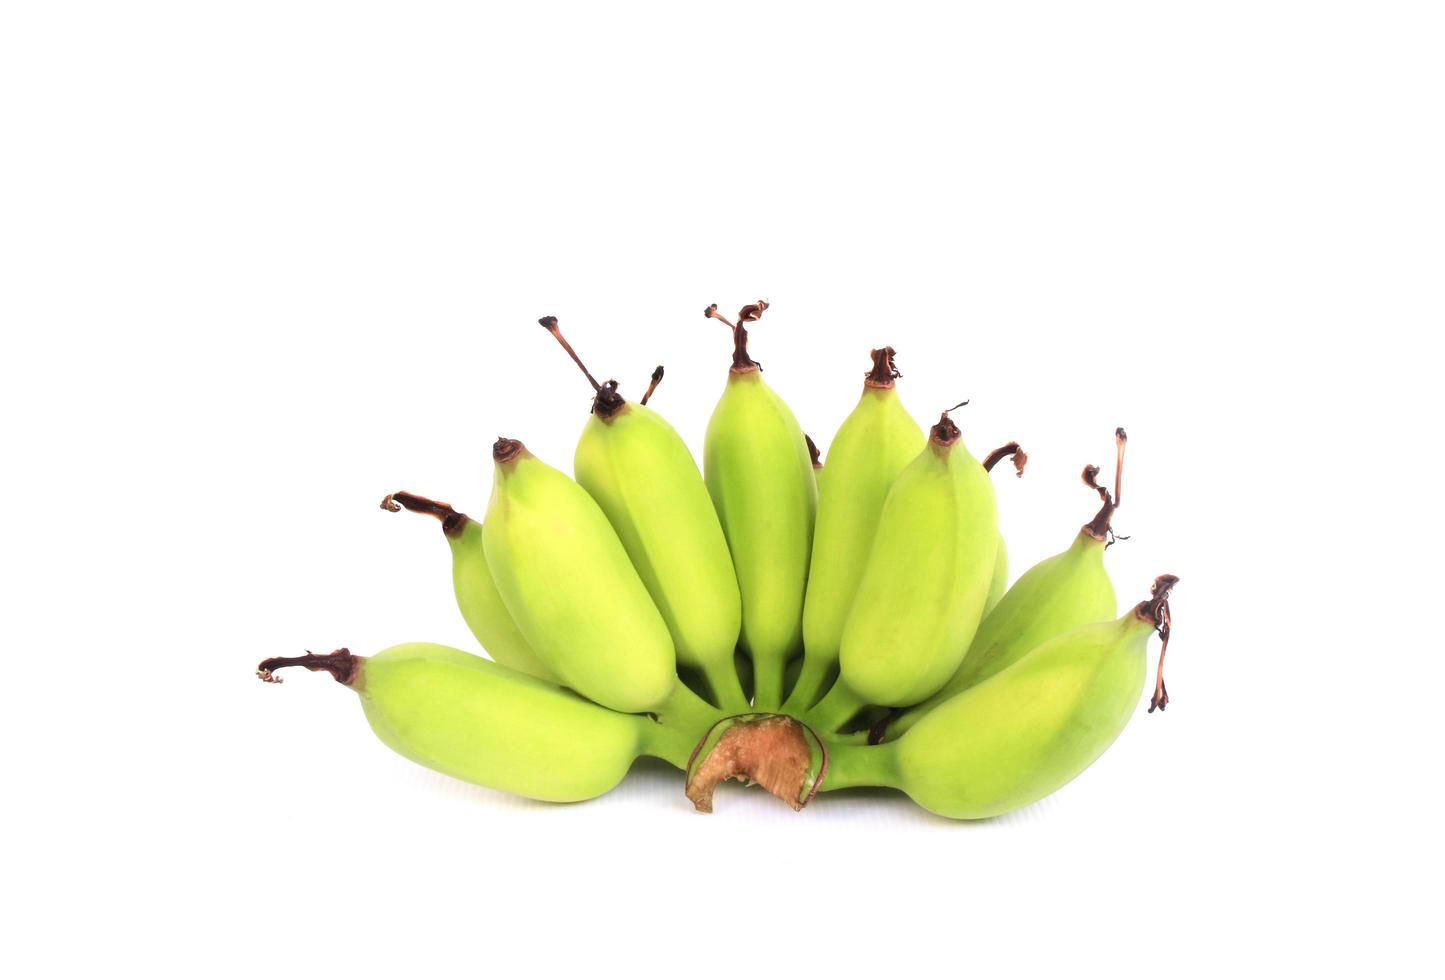 massa bananer på vitt foto